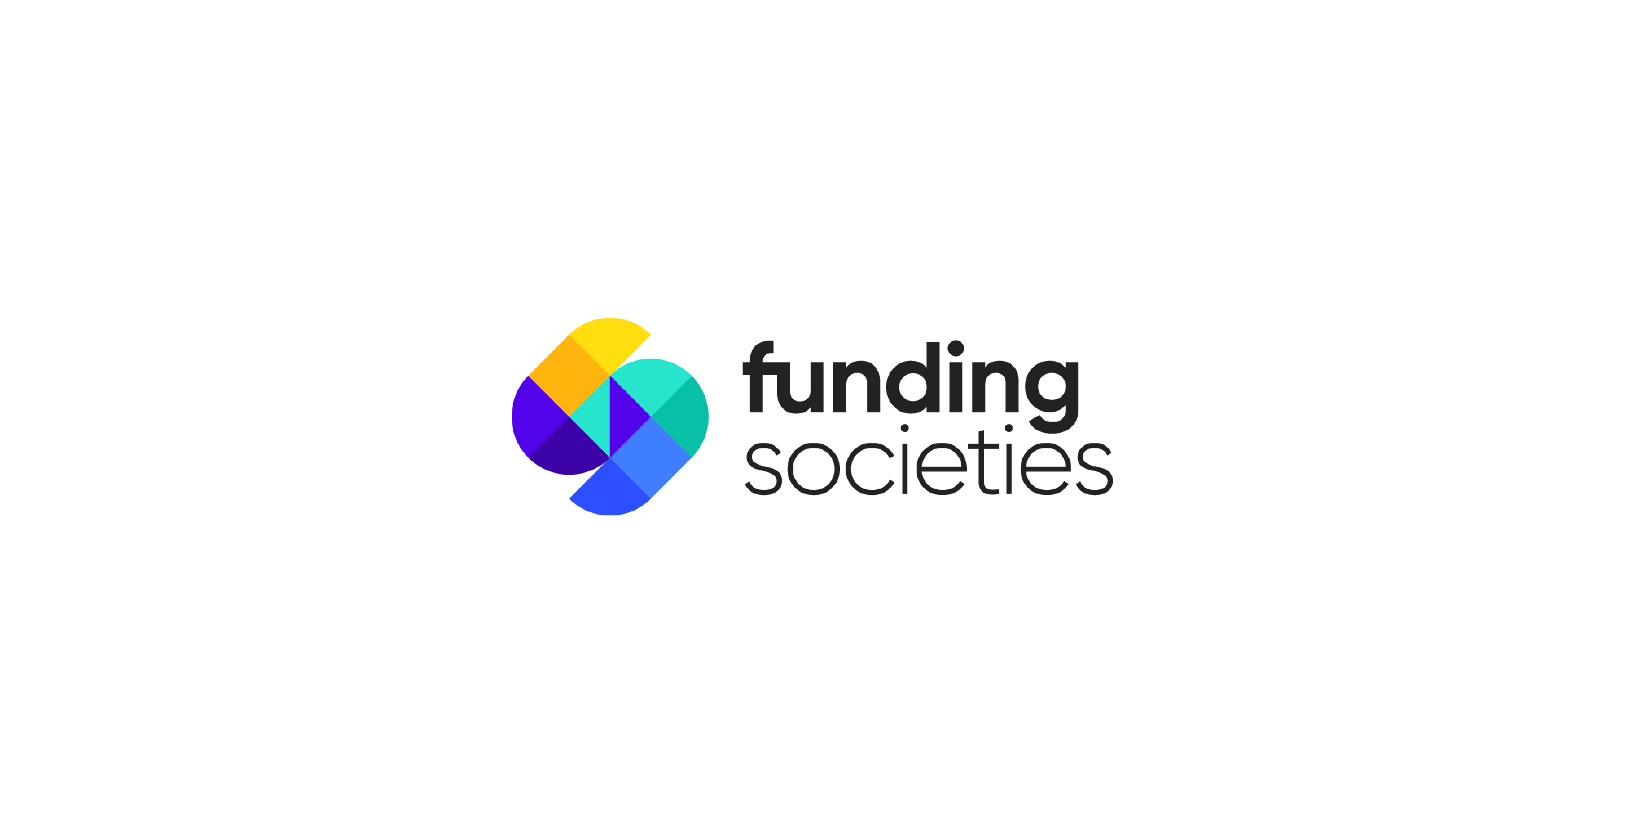 Vision Fund investment portfolio company Funding Societies's logo